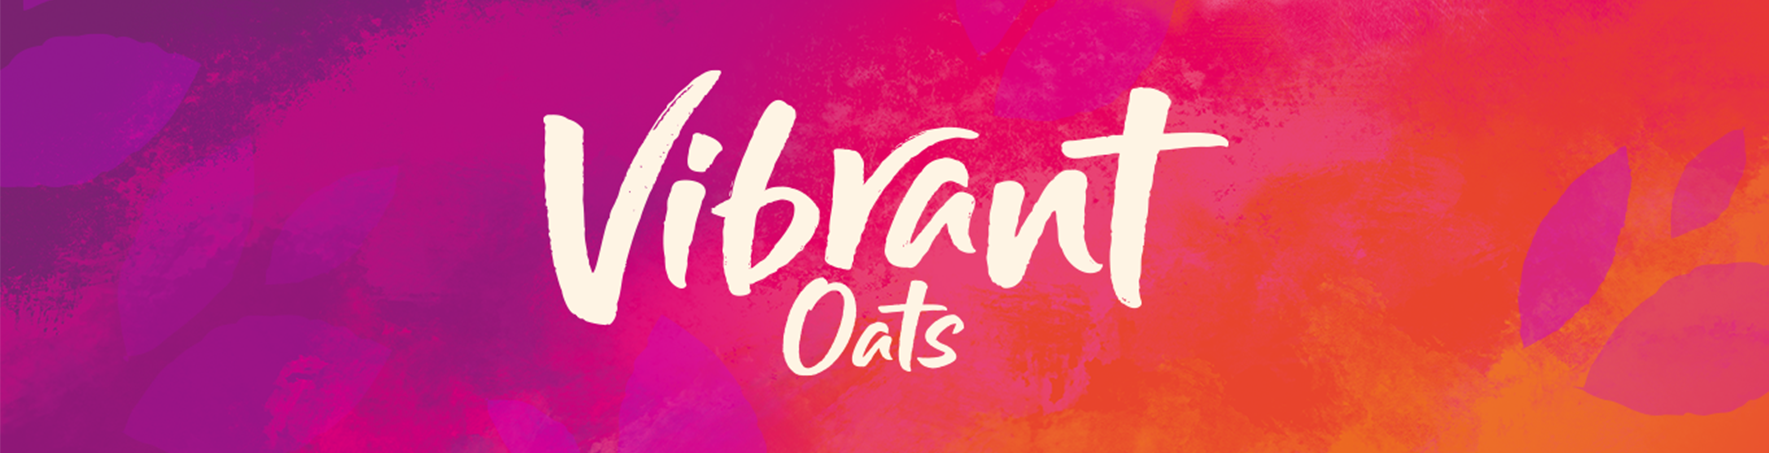 Vibrant oats